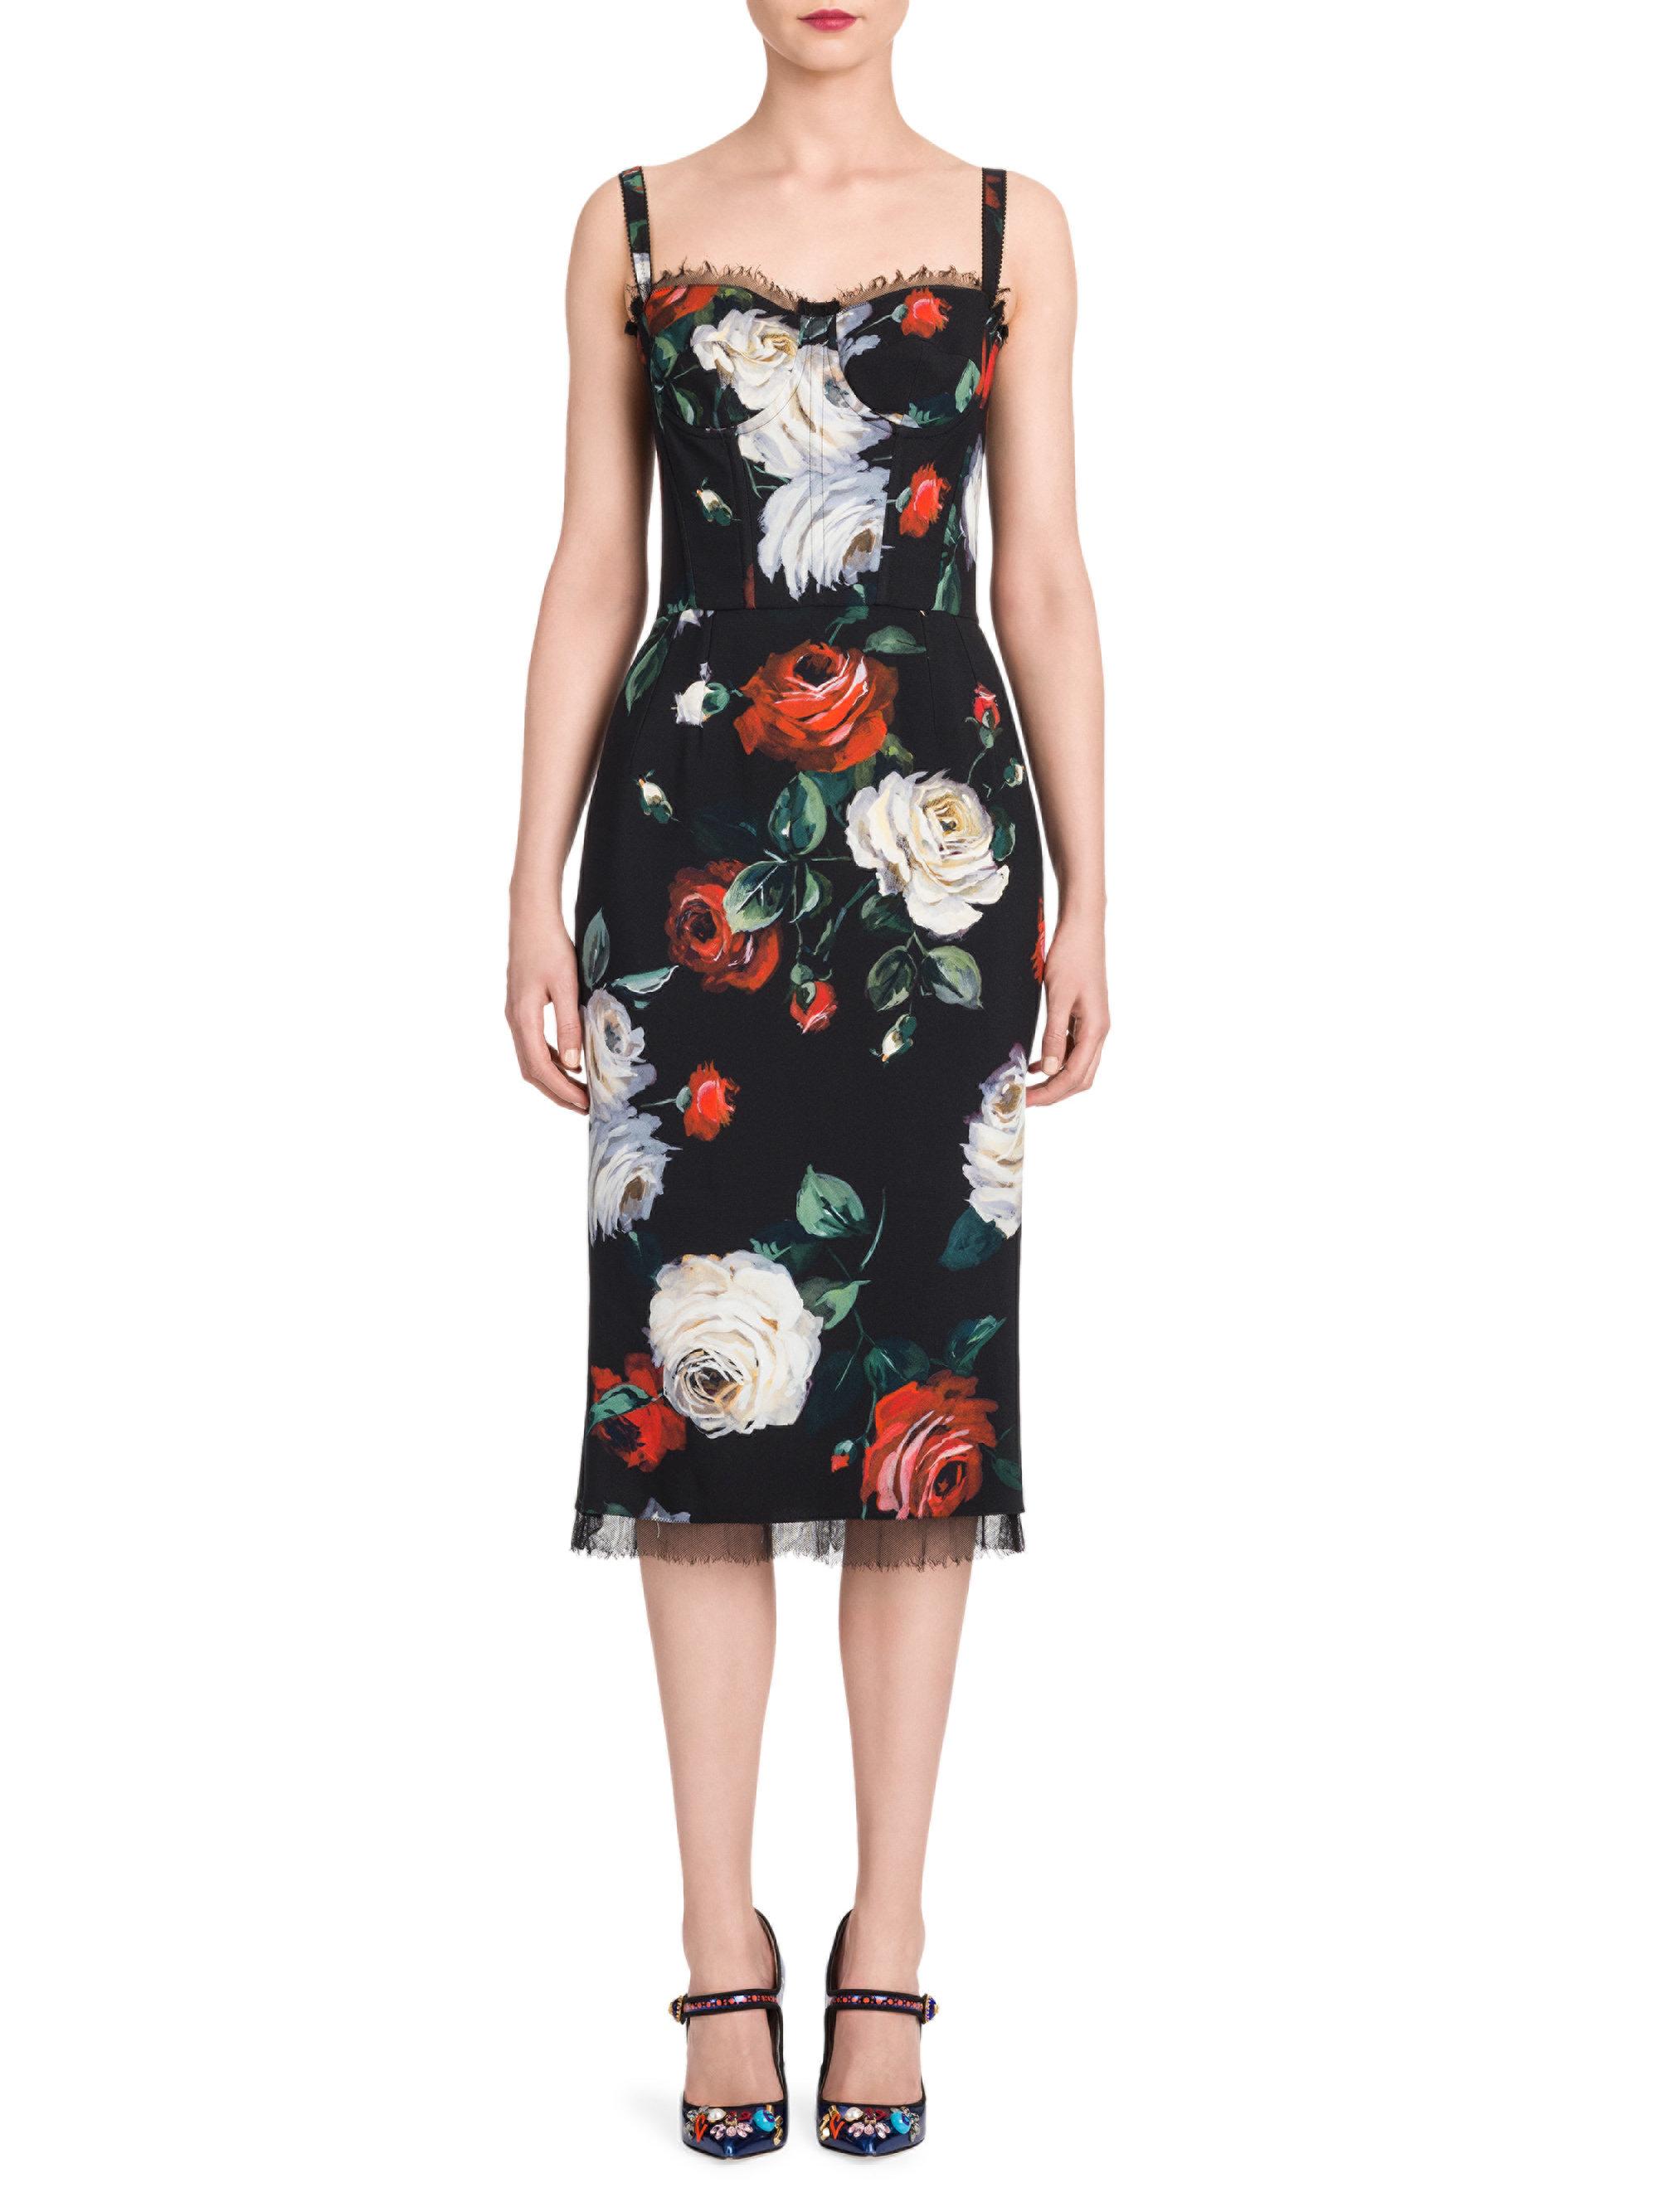 Dolce & Gabbana Floral Bustier Dress in Rose Print (Black) - Lyst